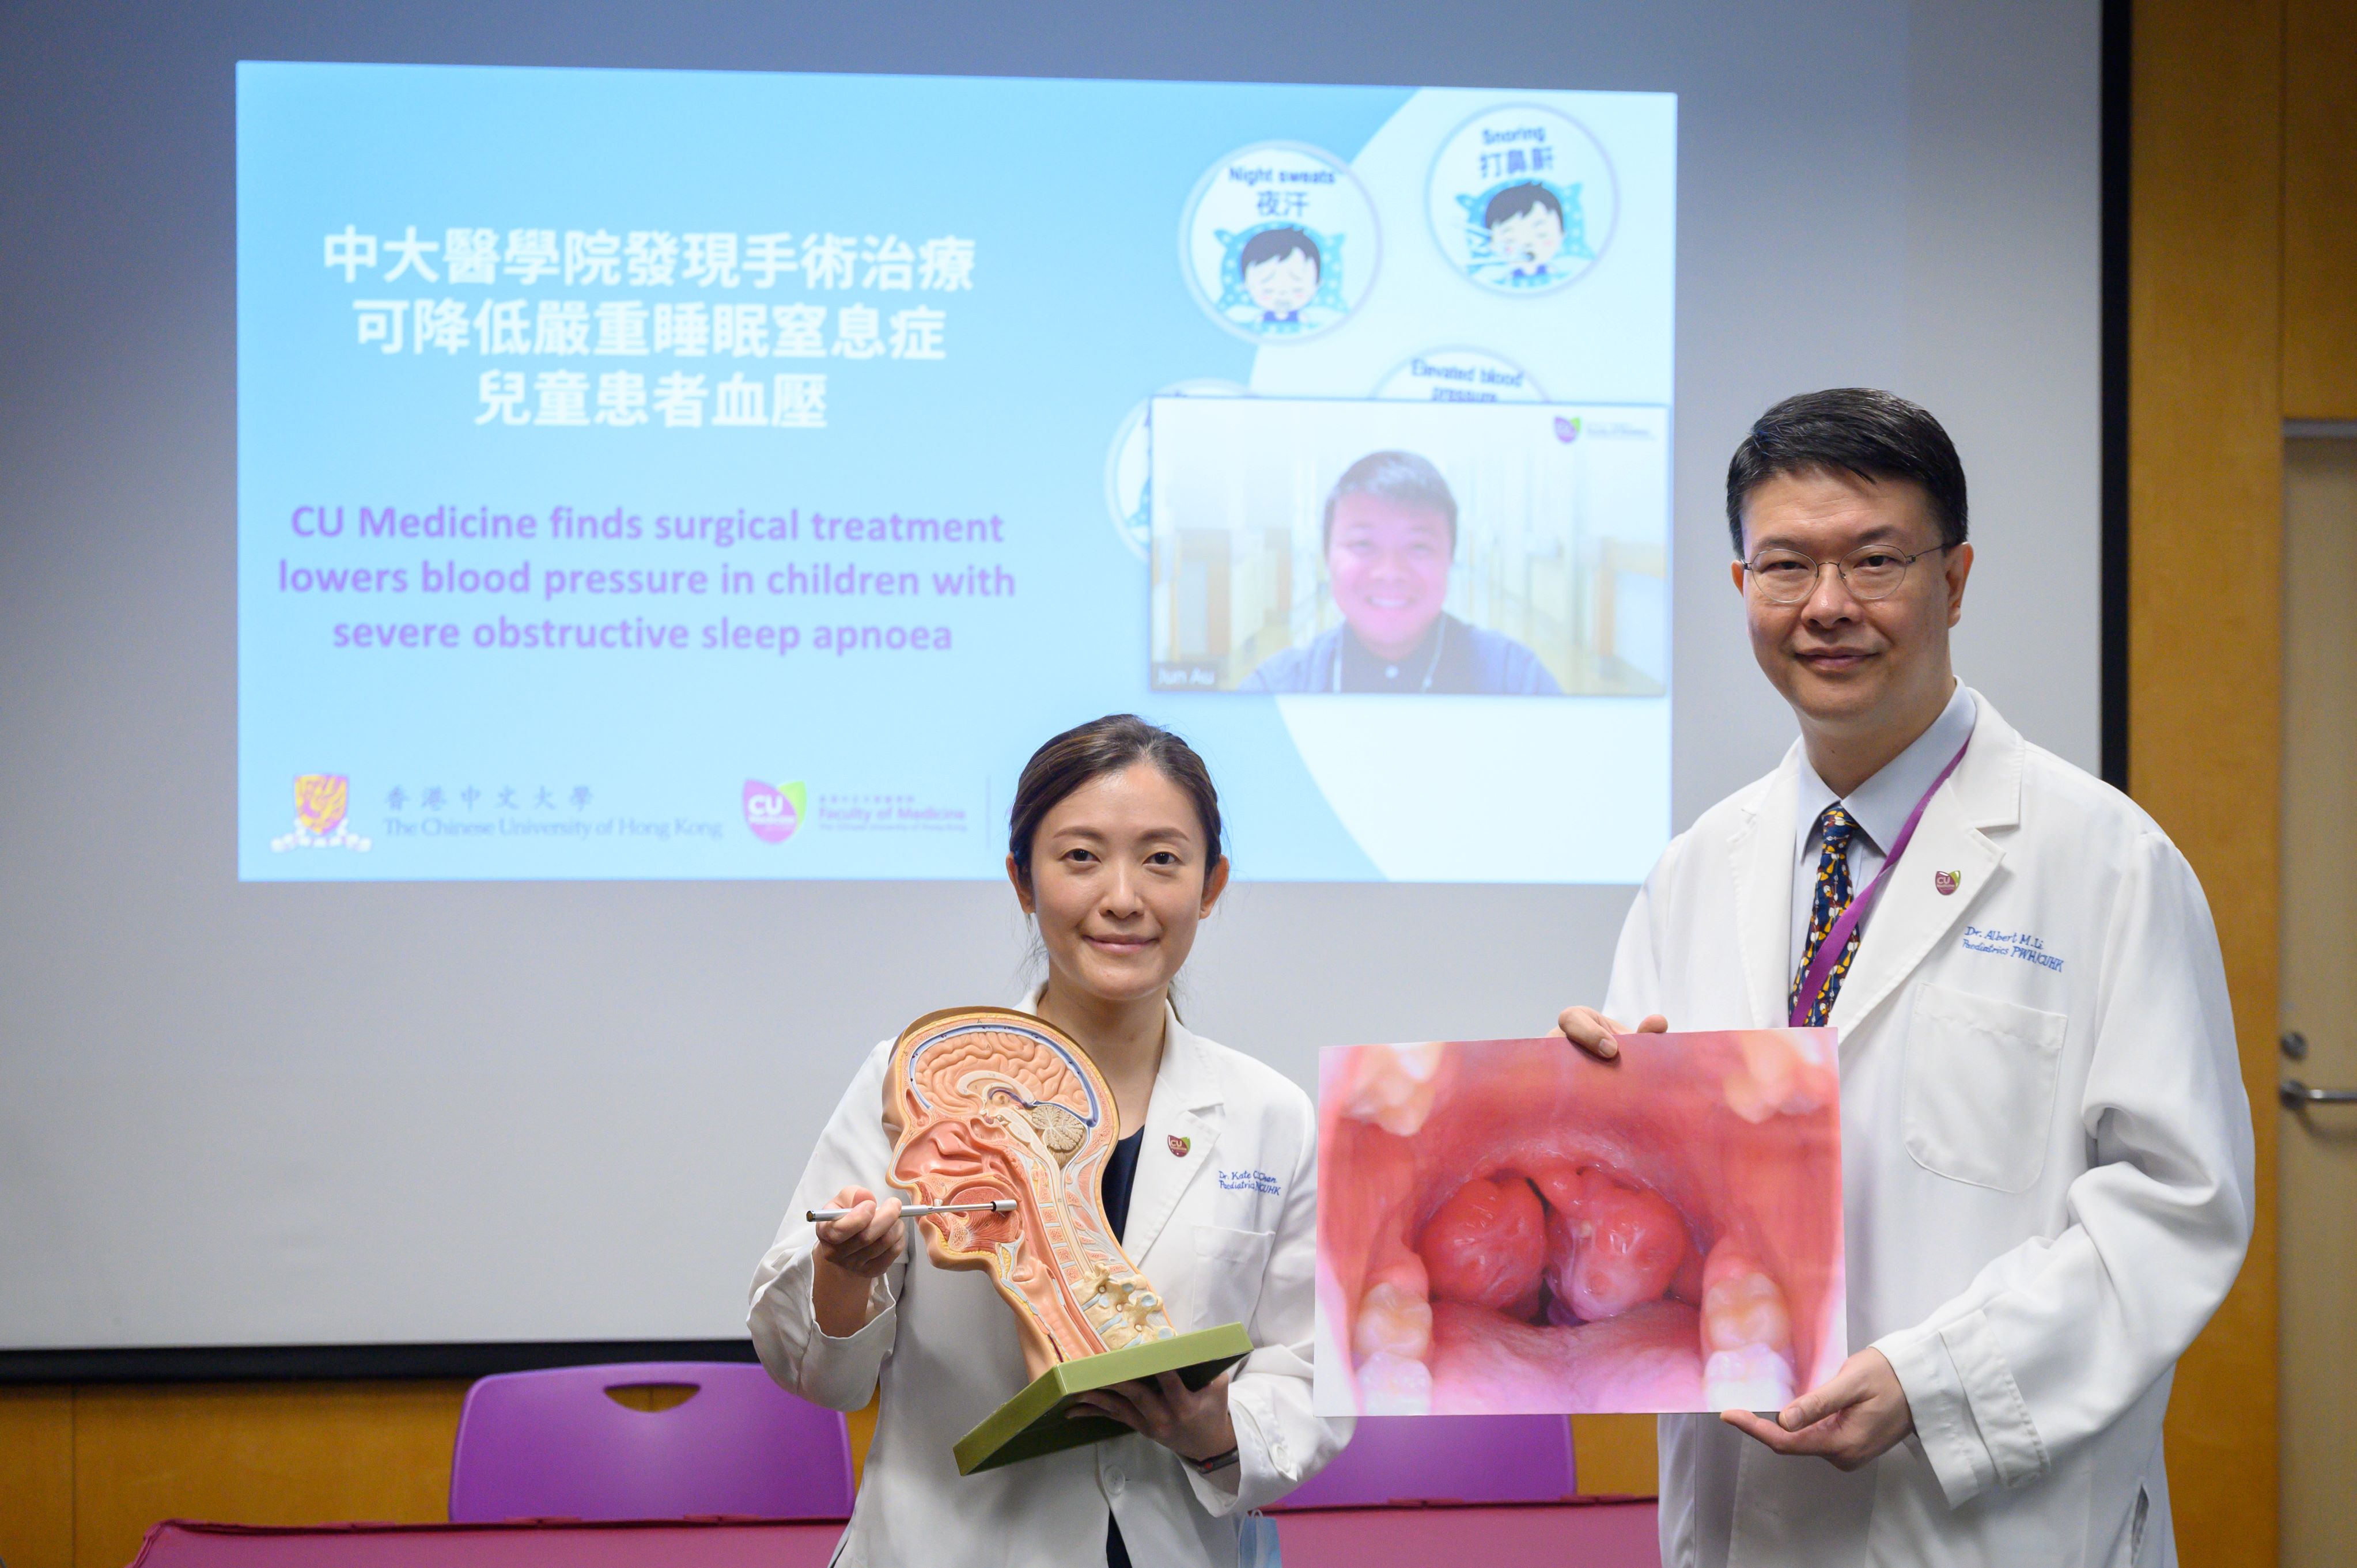 The research team includes Dr Kate Chan, Associate Professor (left); Dr Jun Au, Adjunct Assistant Professor (zoom image on screen); and Professor Albert Li, Chairman, of the Department of Paediatrics at CU Medicine.  